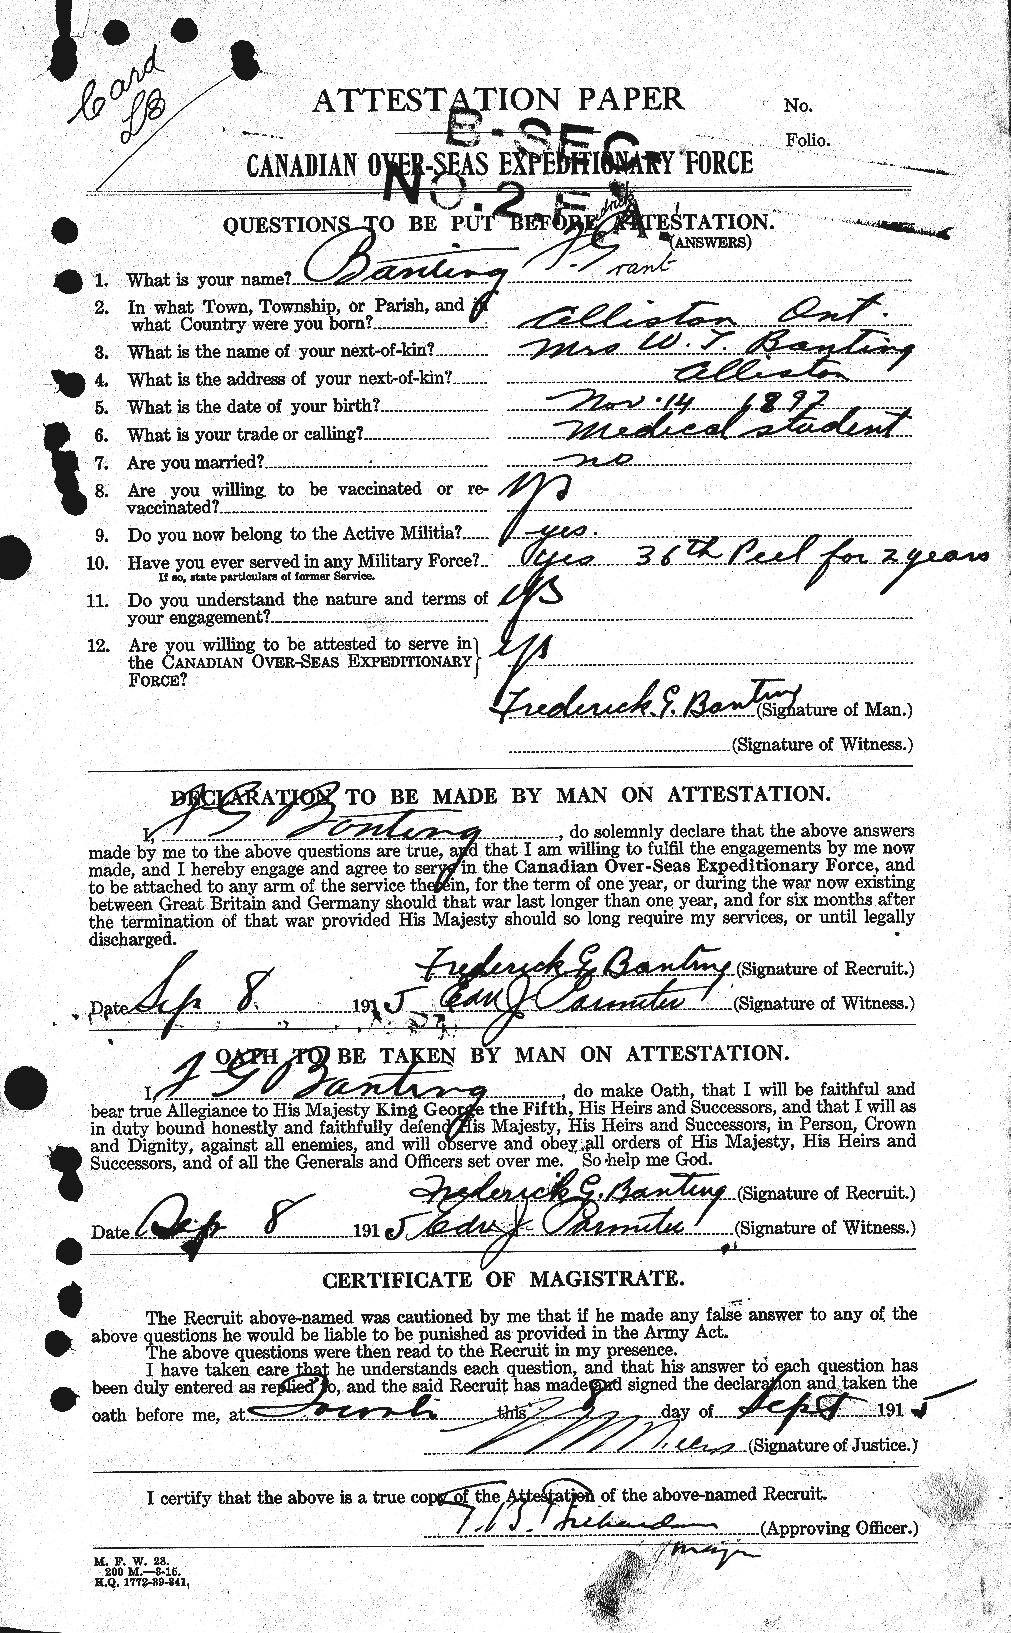 Attestation record: Frederick Grant Banting